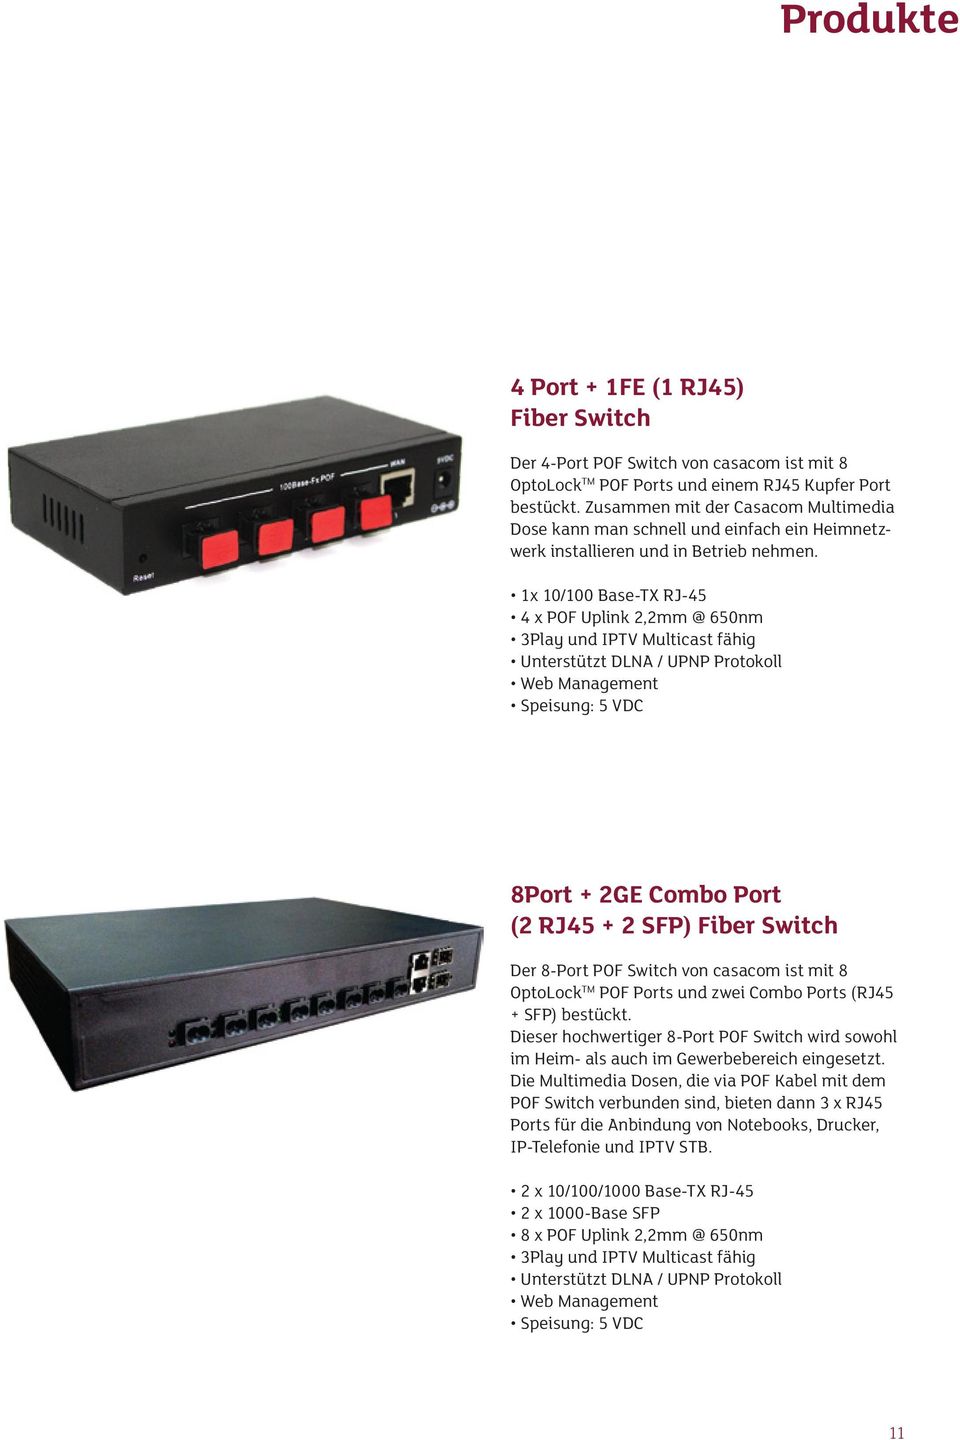 1x 10/100 Base-TX RJ-45 4 x POF Uplink 2,2mm @ 650nm 3Play und IPTV Multicast fähig Unterstützt DLNA / UPNP Protokoll Web Management Speisung: 5 VDC 8Port + 2GE Combo Port (2 RJ45 + 2 SFP) Fiber